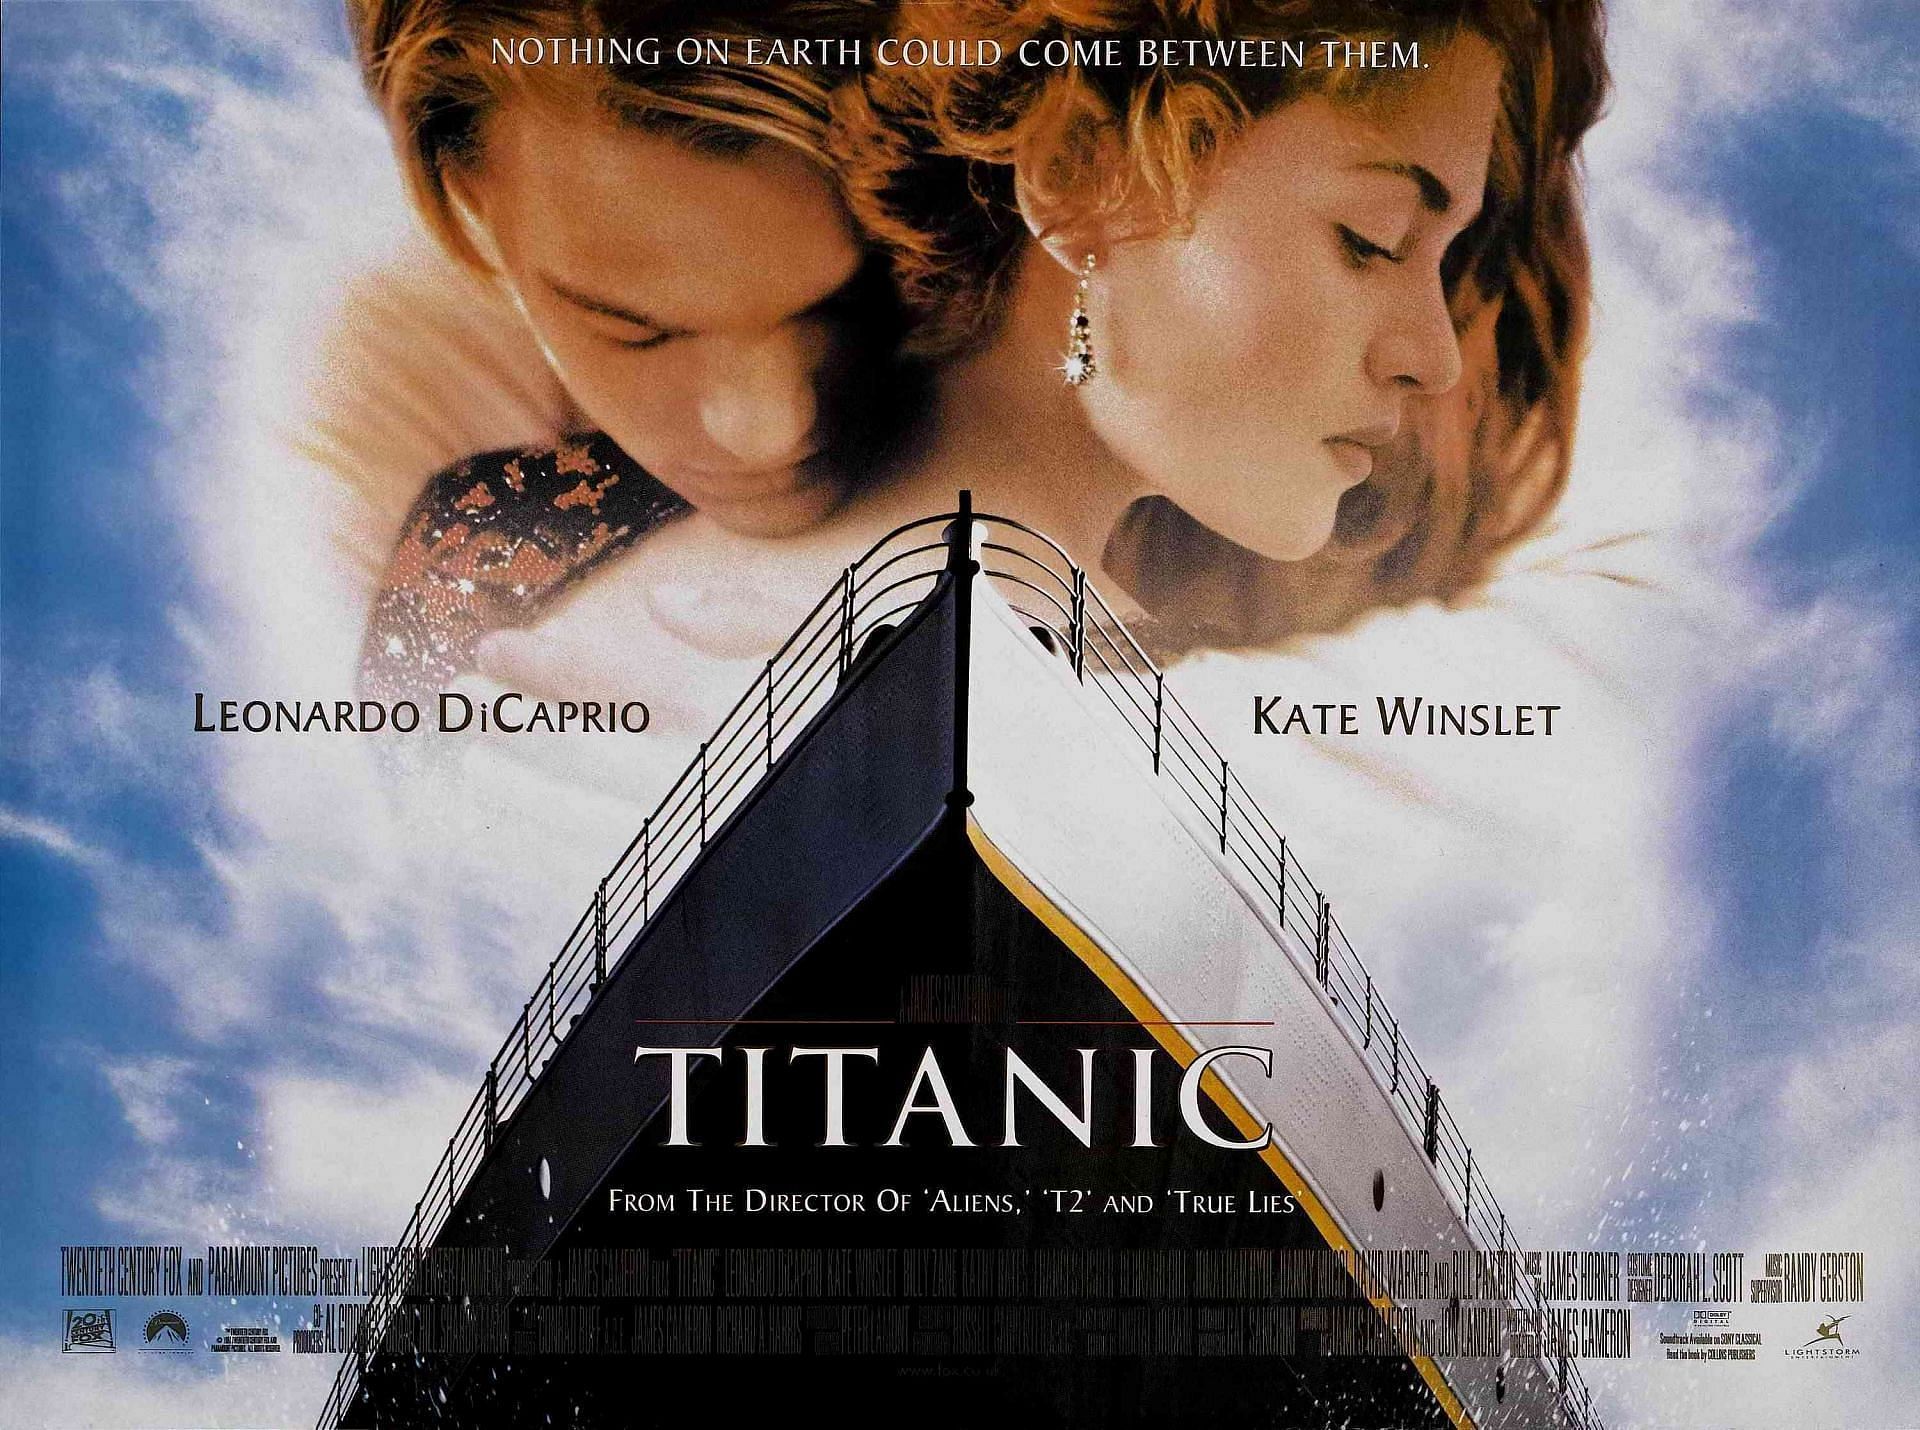 Titanic (Image via Paramount)